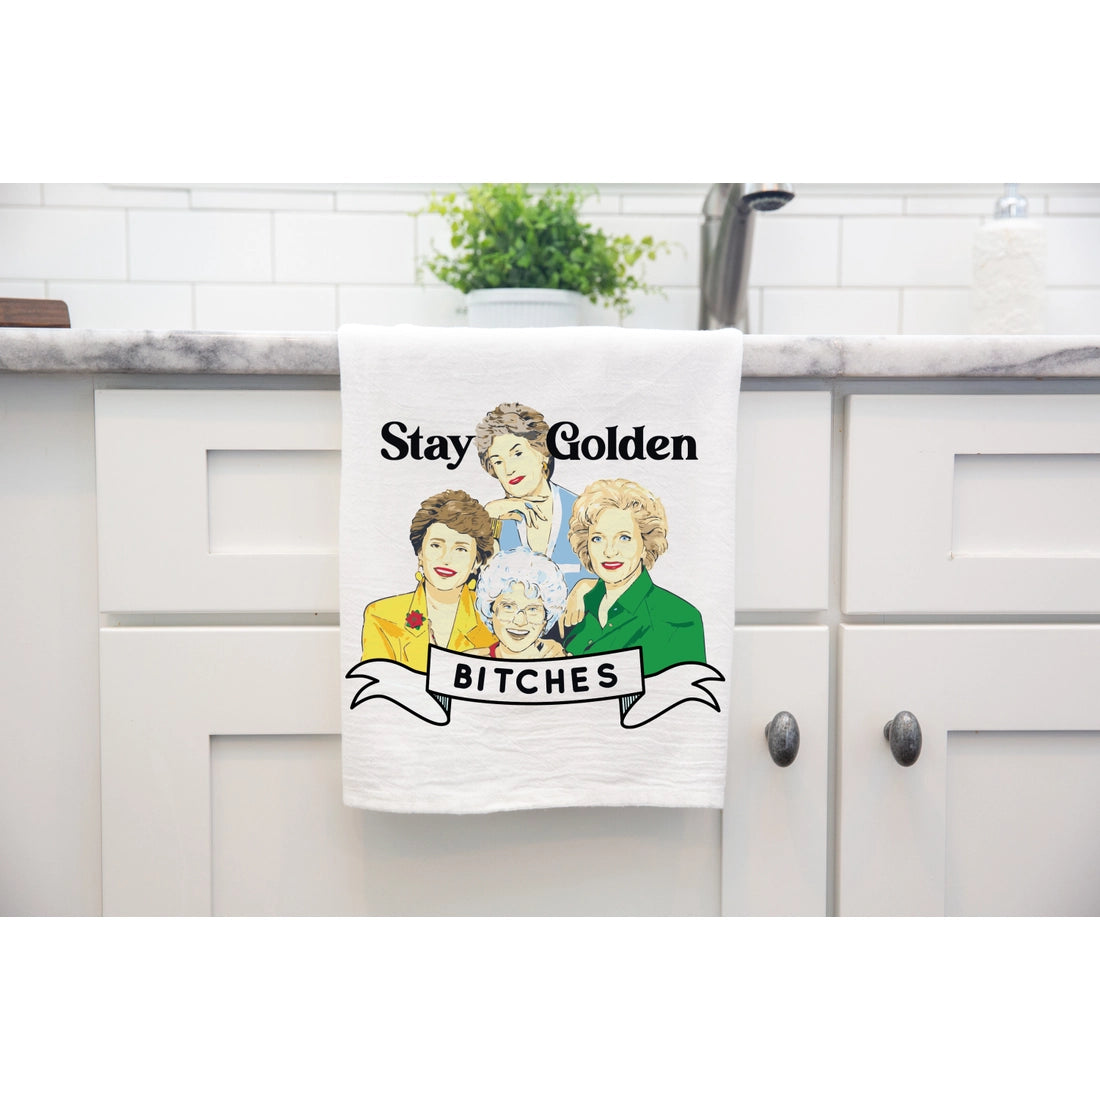 Stay Golden Kitchen Towel